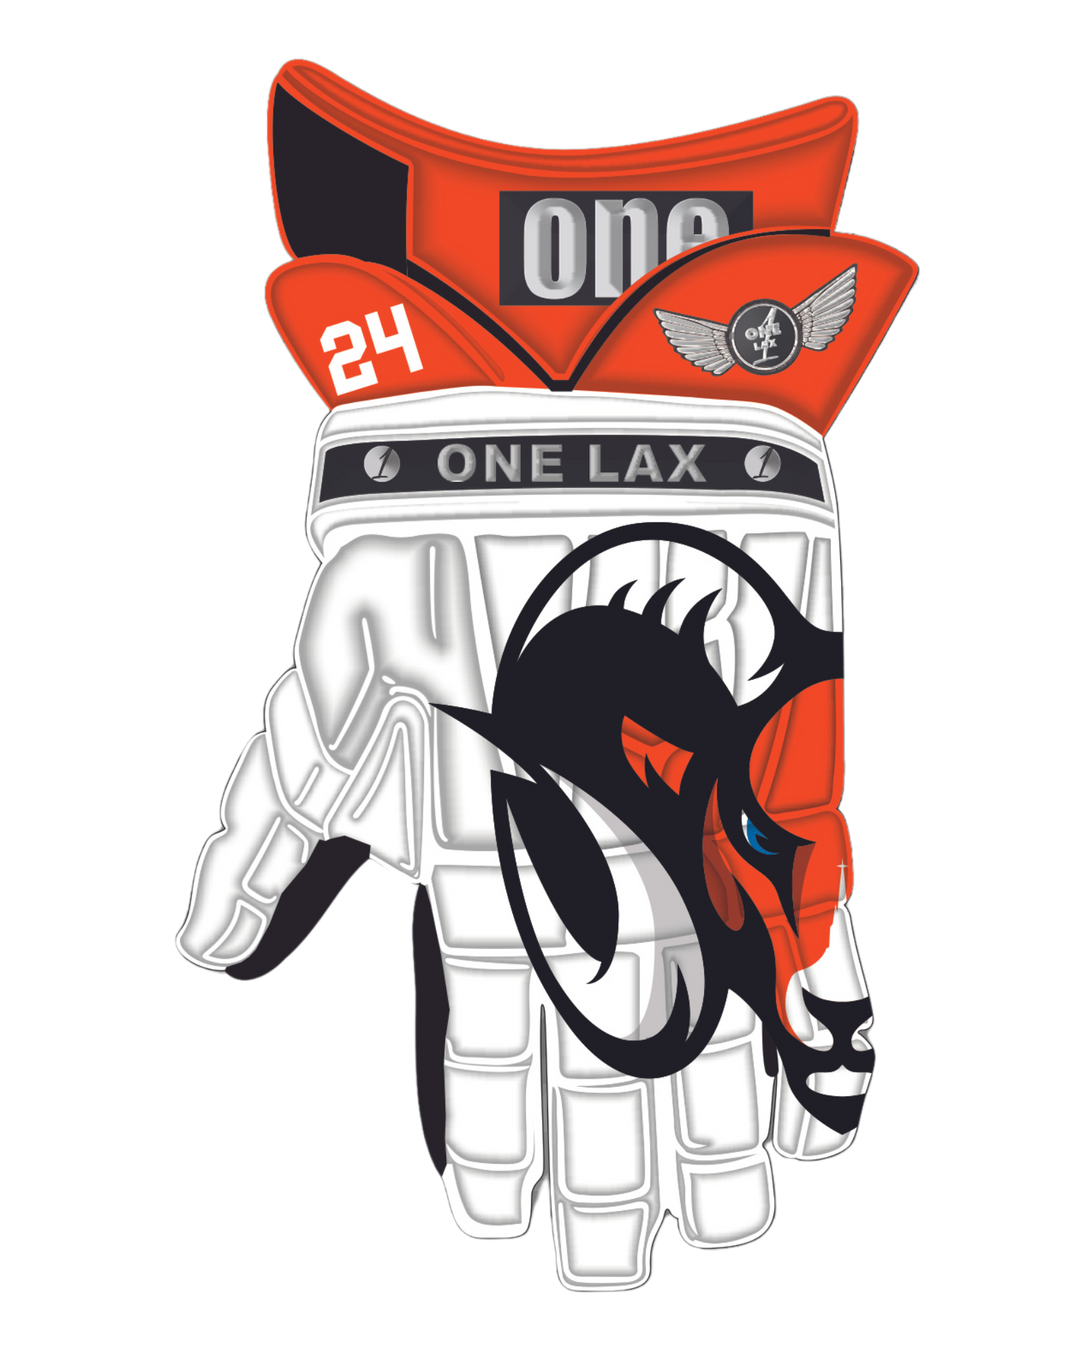 Cathedral Prep Ramblers Lacrosse Team | HYBRID Box & Field Lacrosse Gloves - One Lax